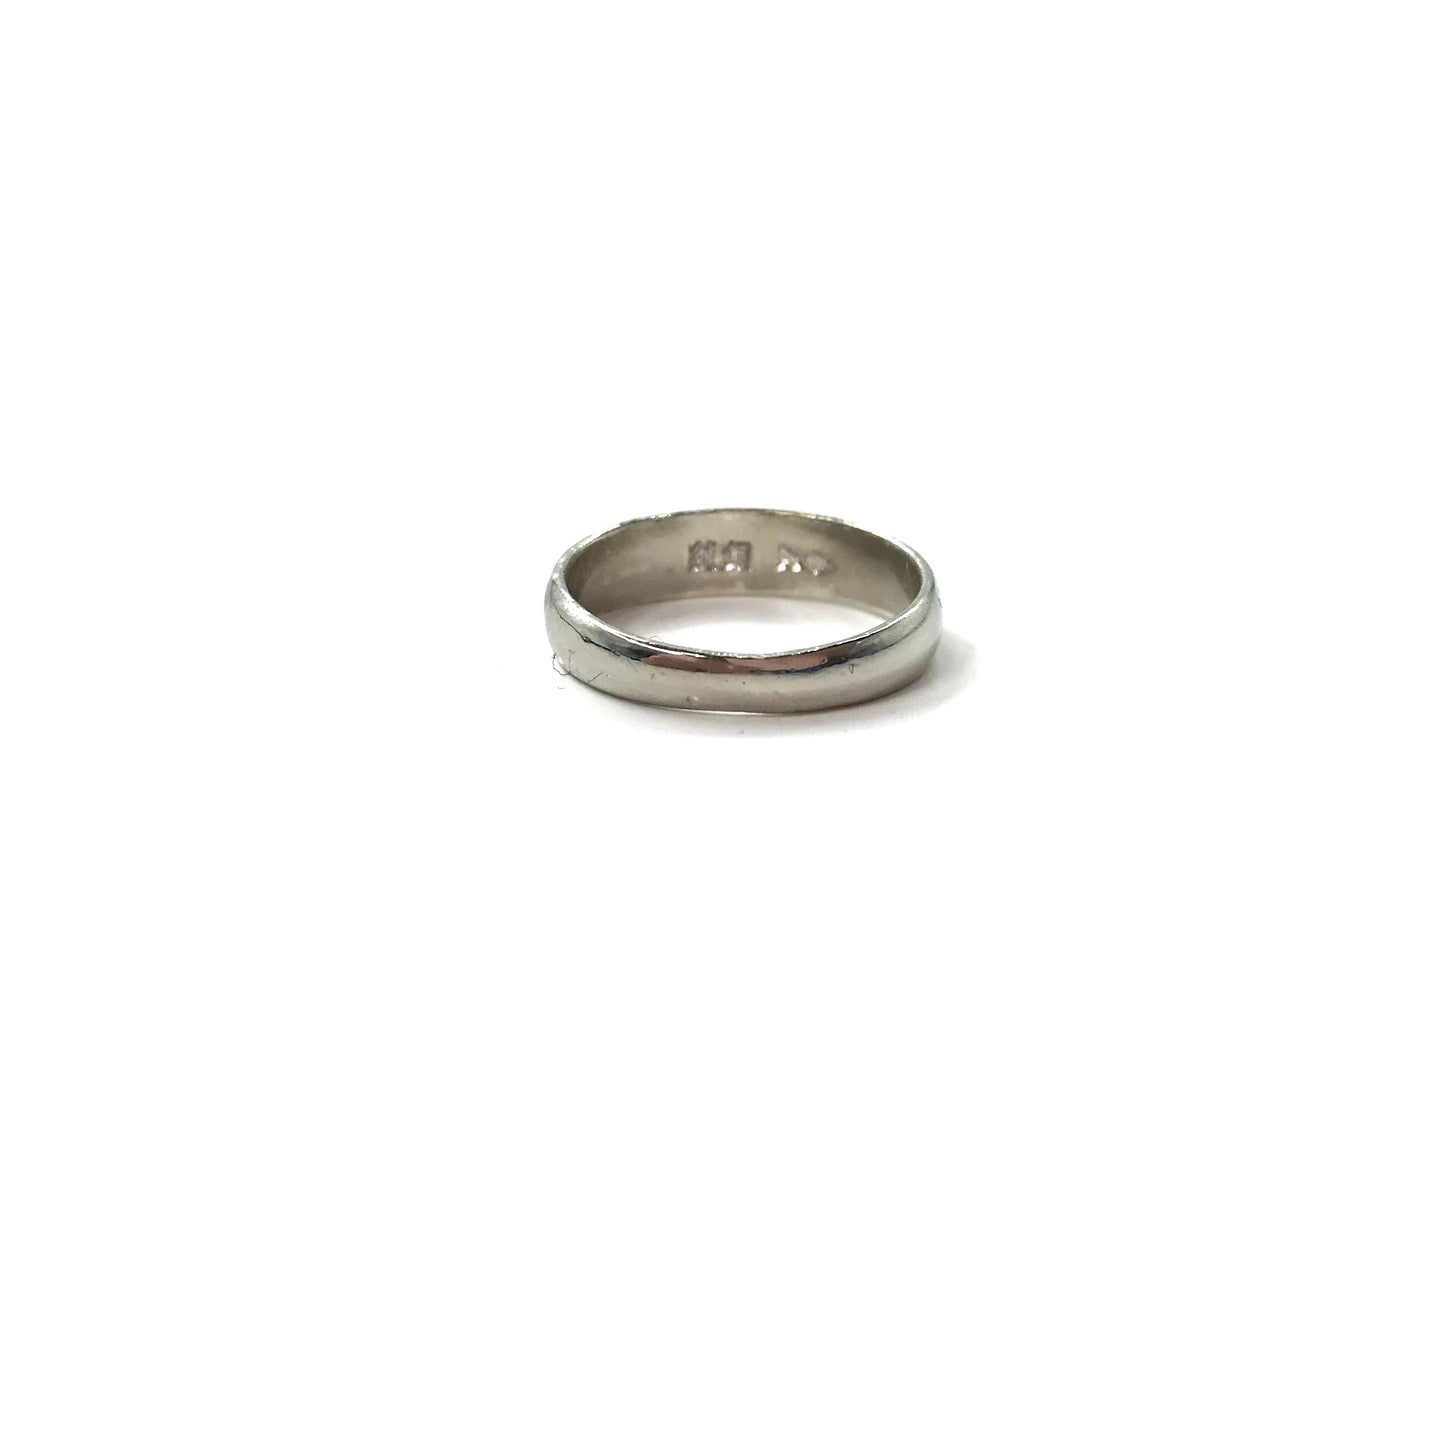 Vintage Japanese Silver Ring シルバーリング 指輪 15号 純銀 SILVER1000 菊紋章 天皇 奉祝御金婚 御在位50年